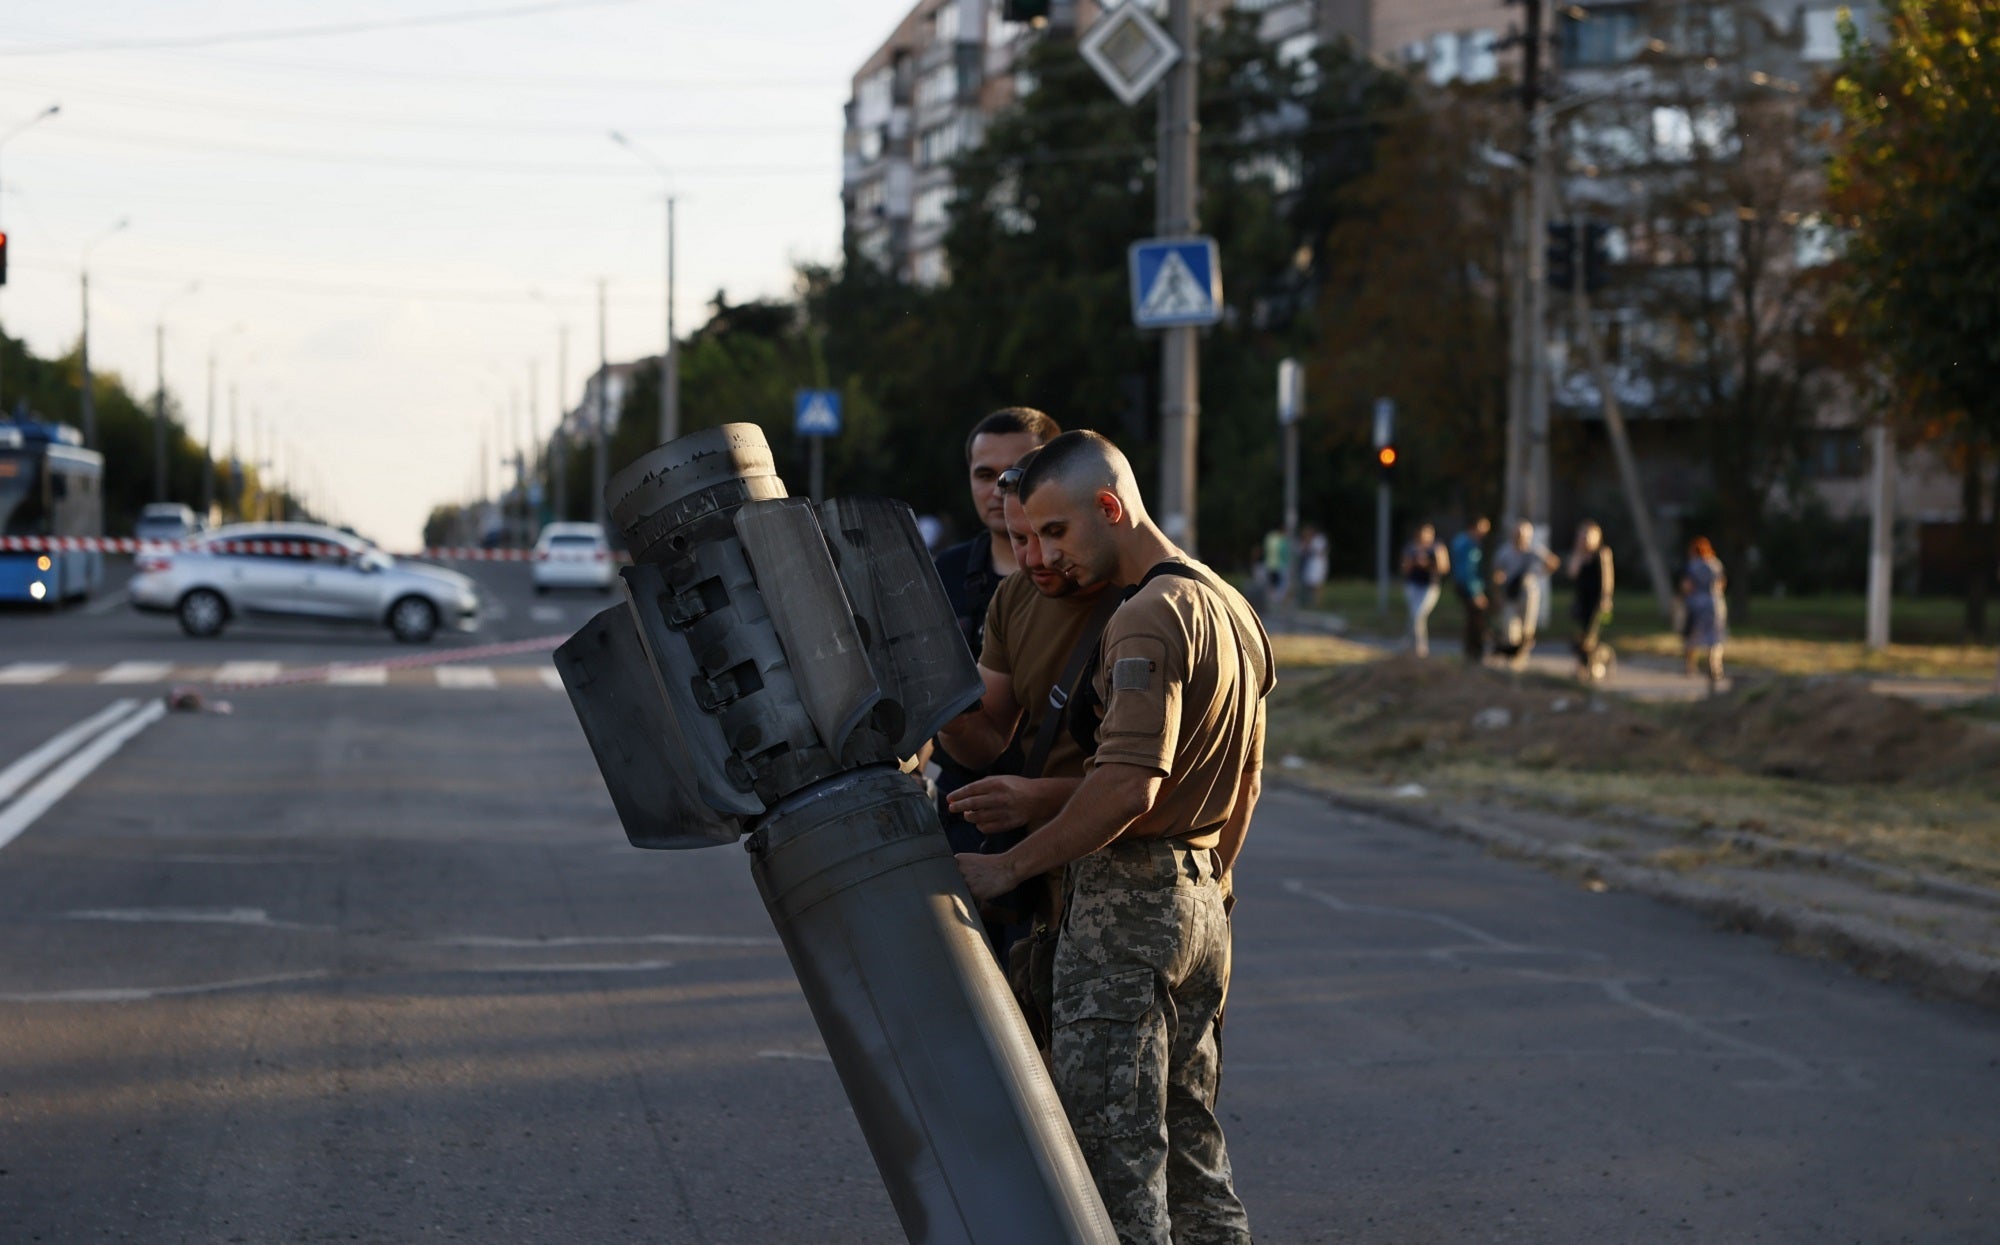 Seismic sensors tracked 1,200 explosions in Ukraine